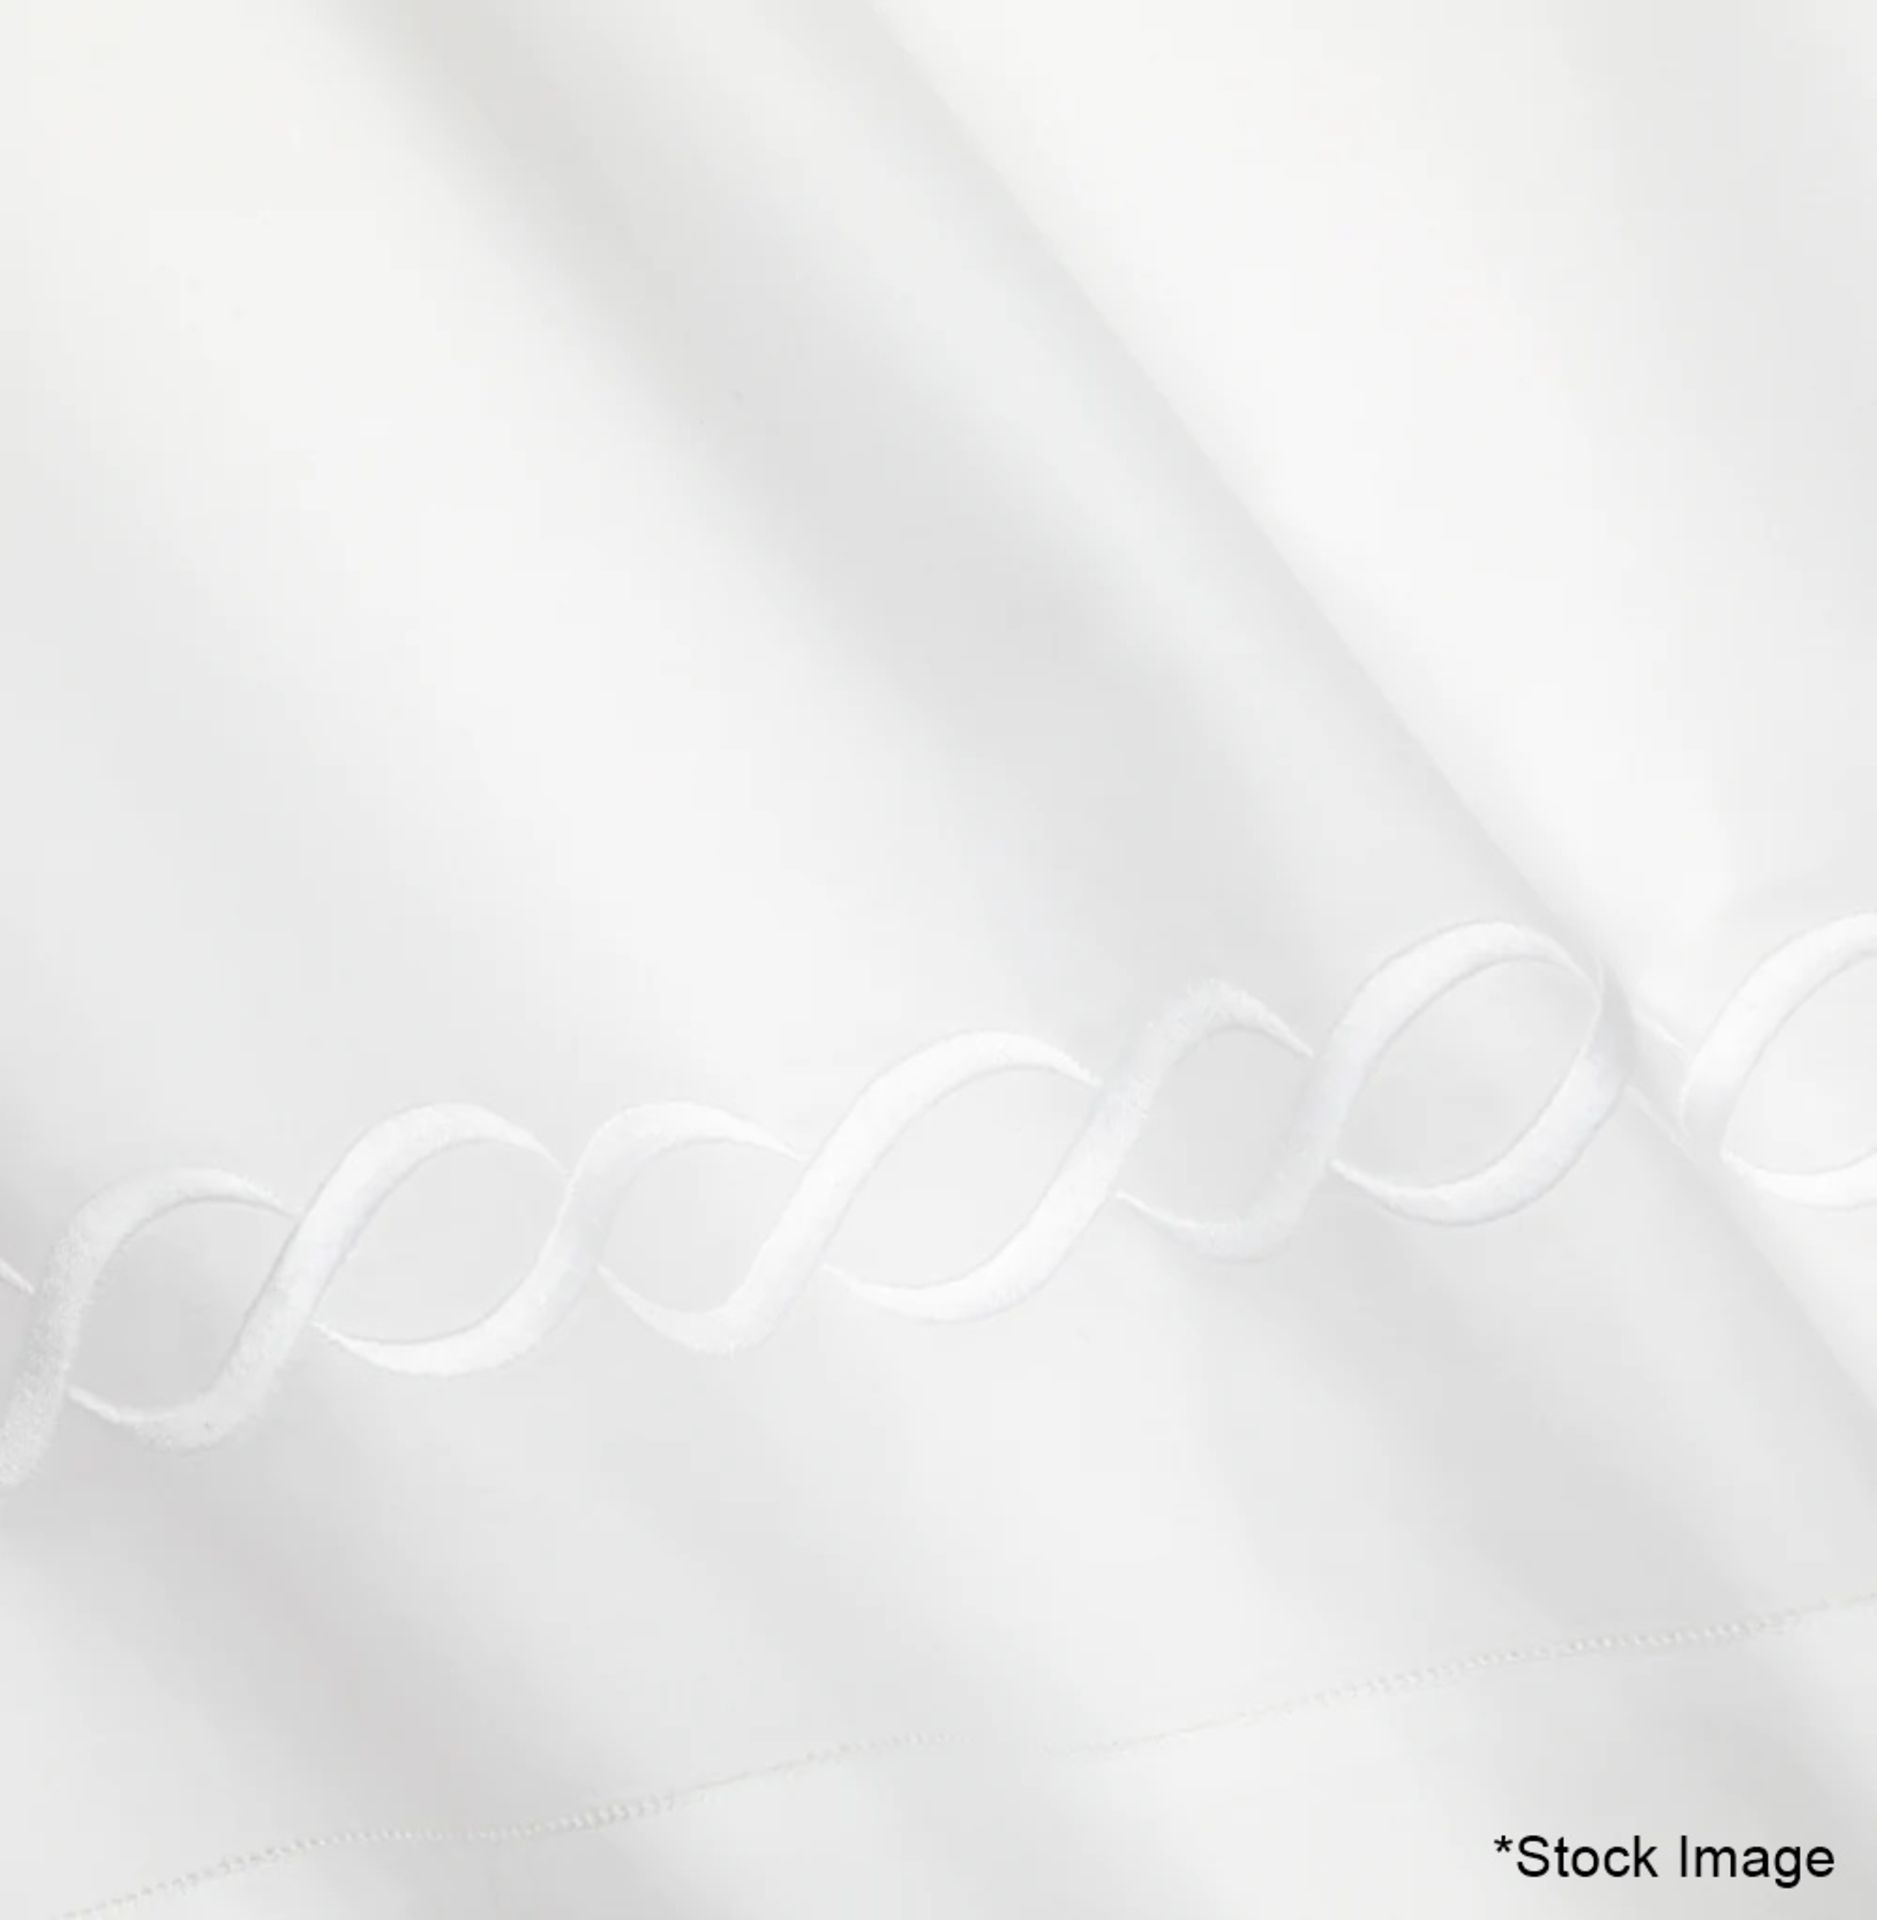 1 x PRATESI Treccia White Forever Embroidered Angel Skin Top Sheet 305x270cm